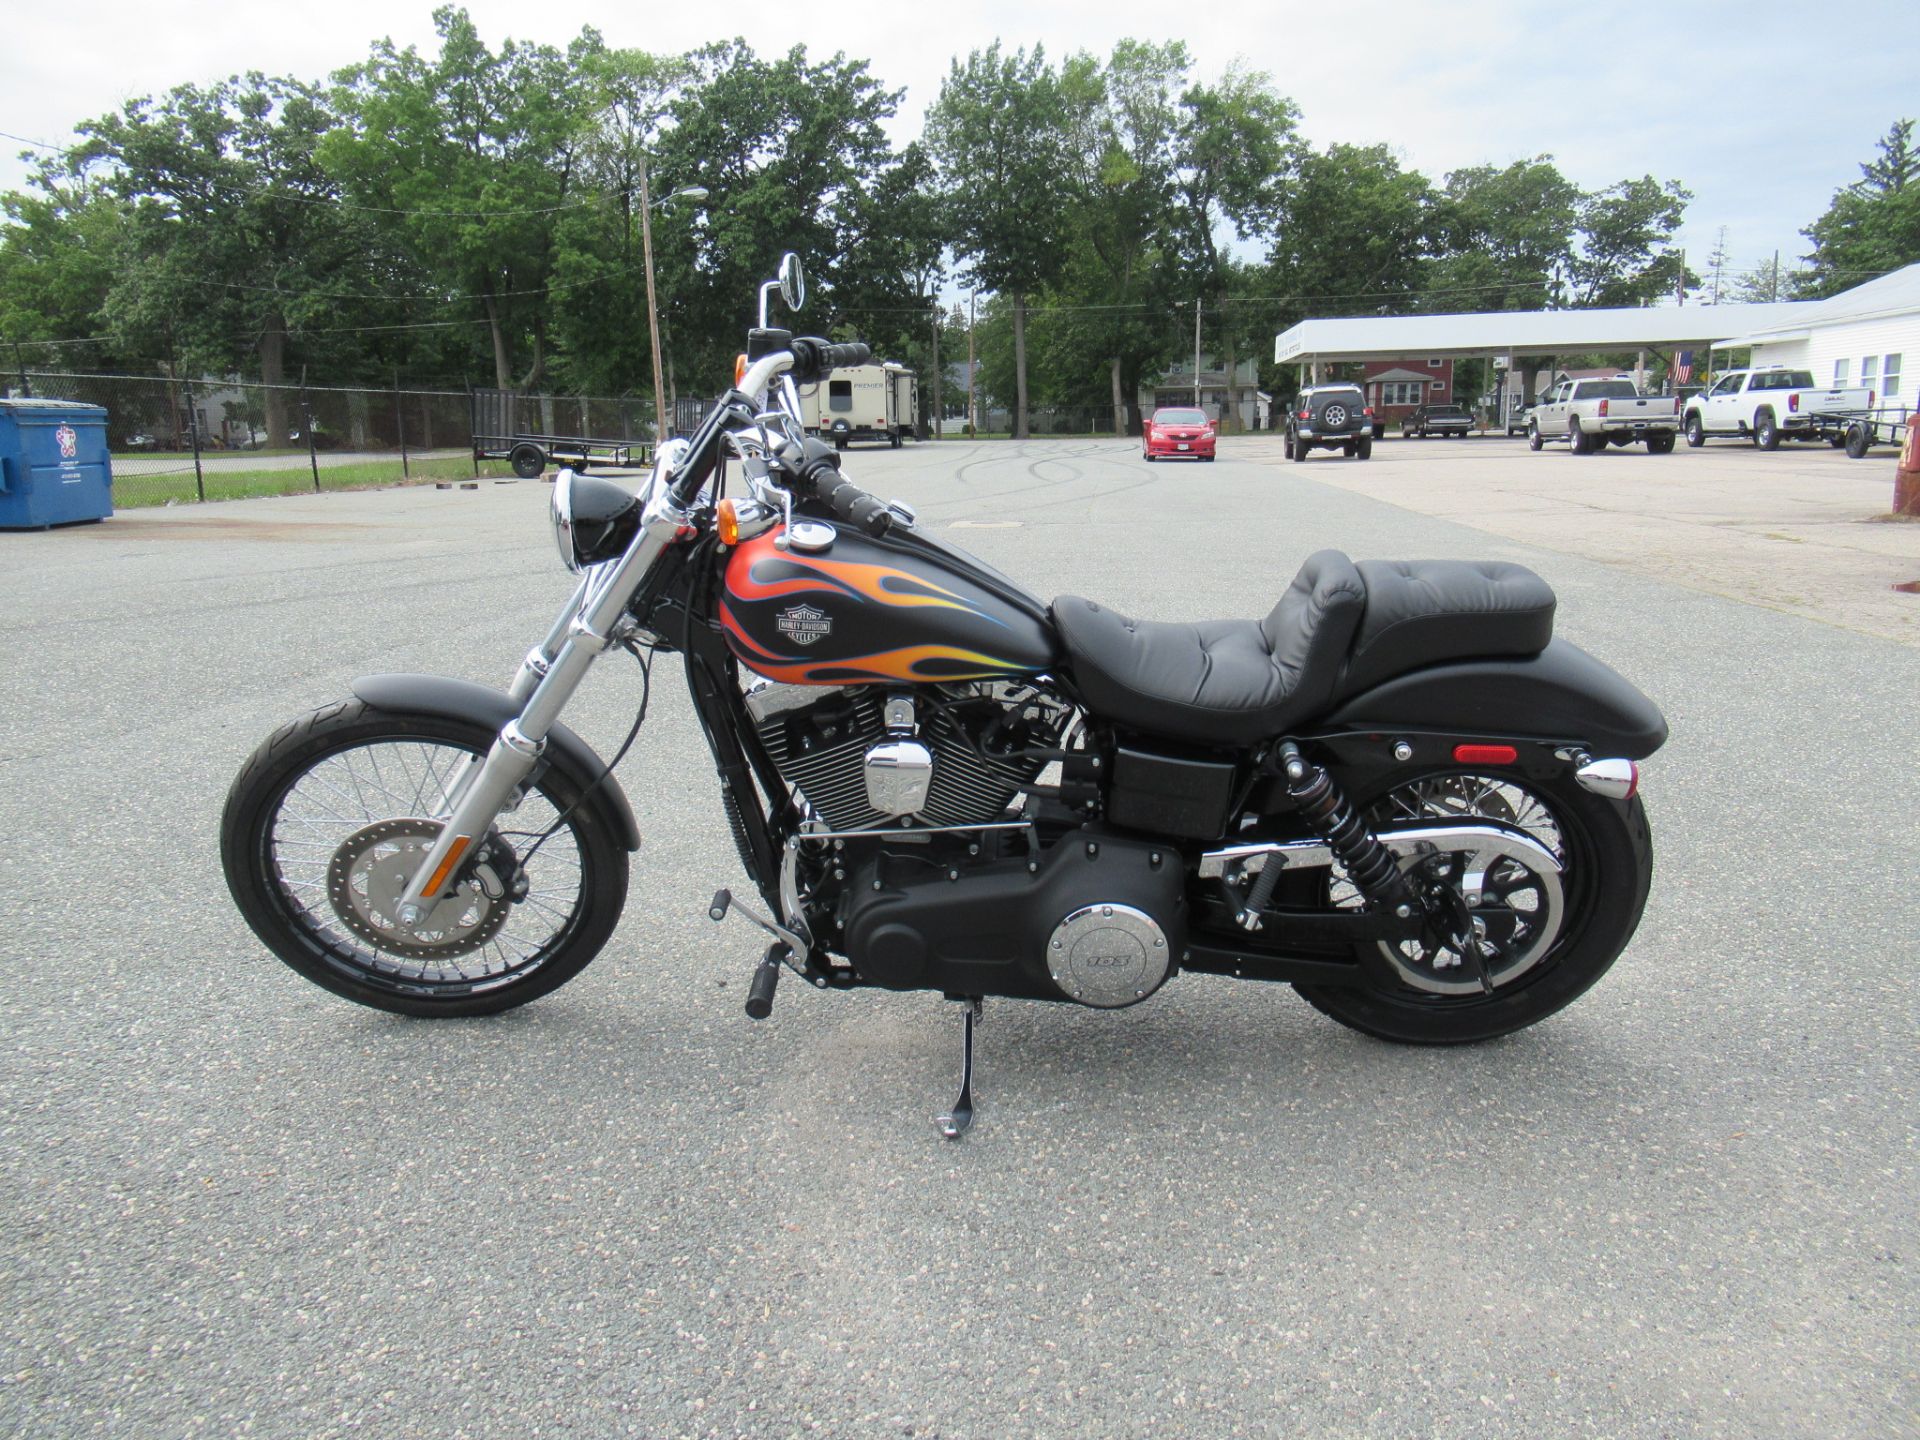 2015 Harley-Davidson Wide Glide® in Springfield, Massachusetts - Photo 4